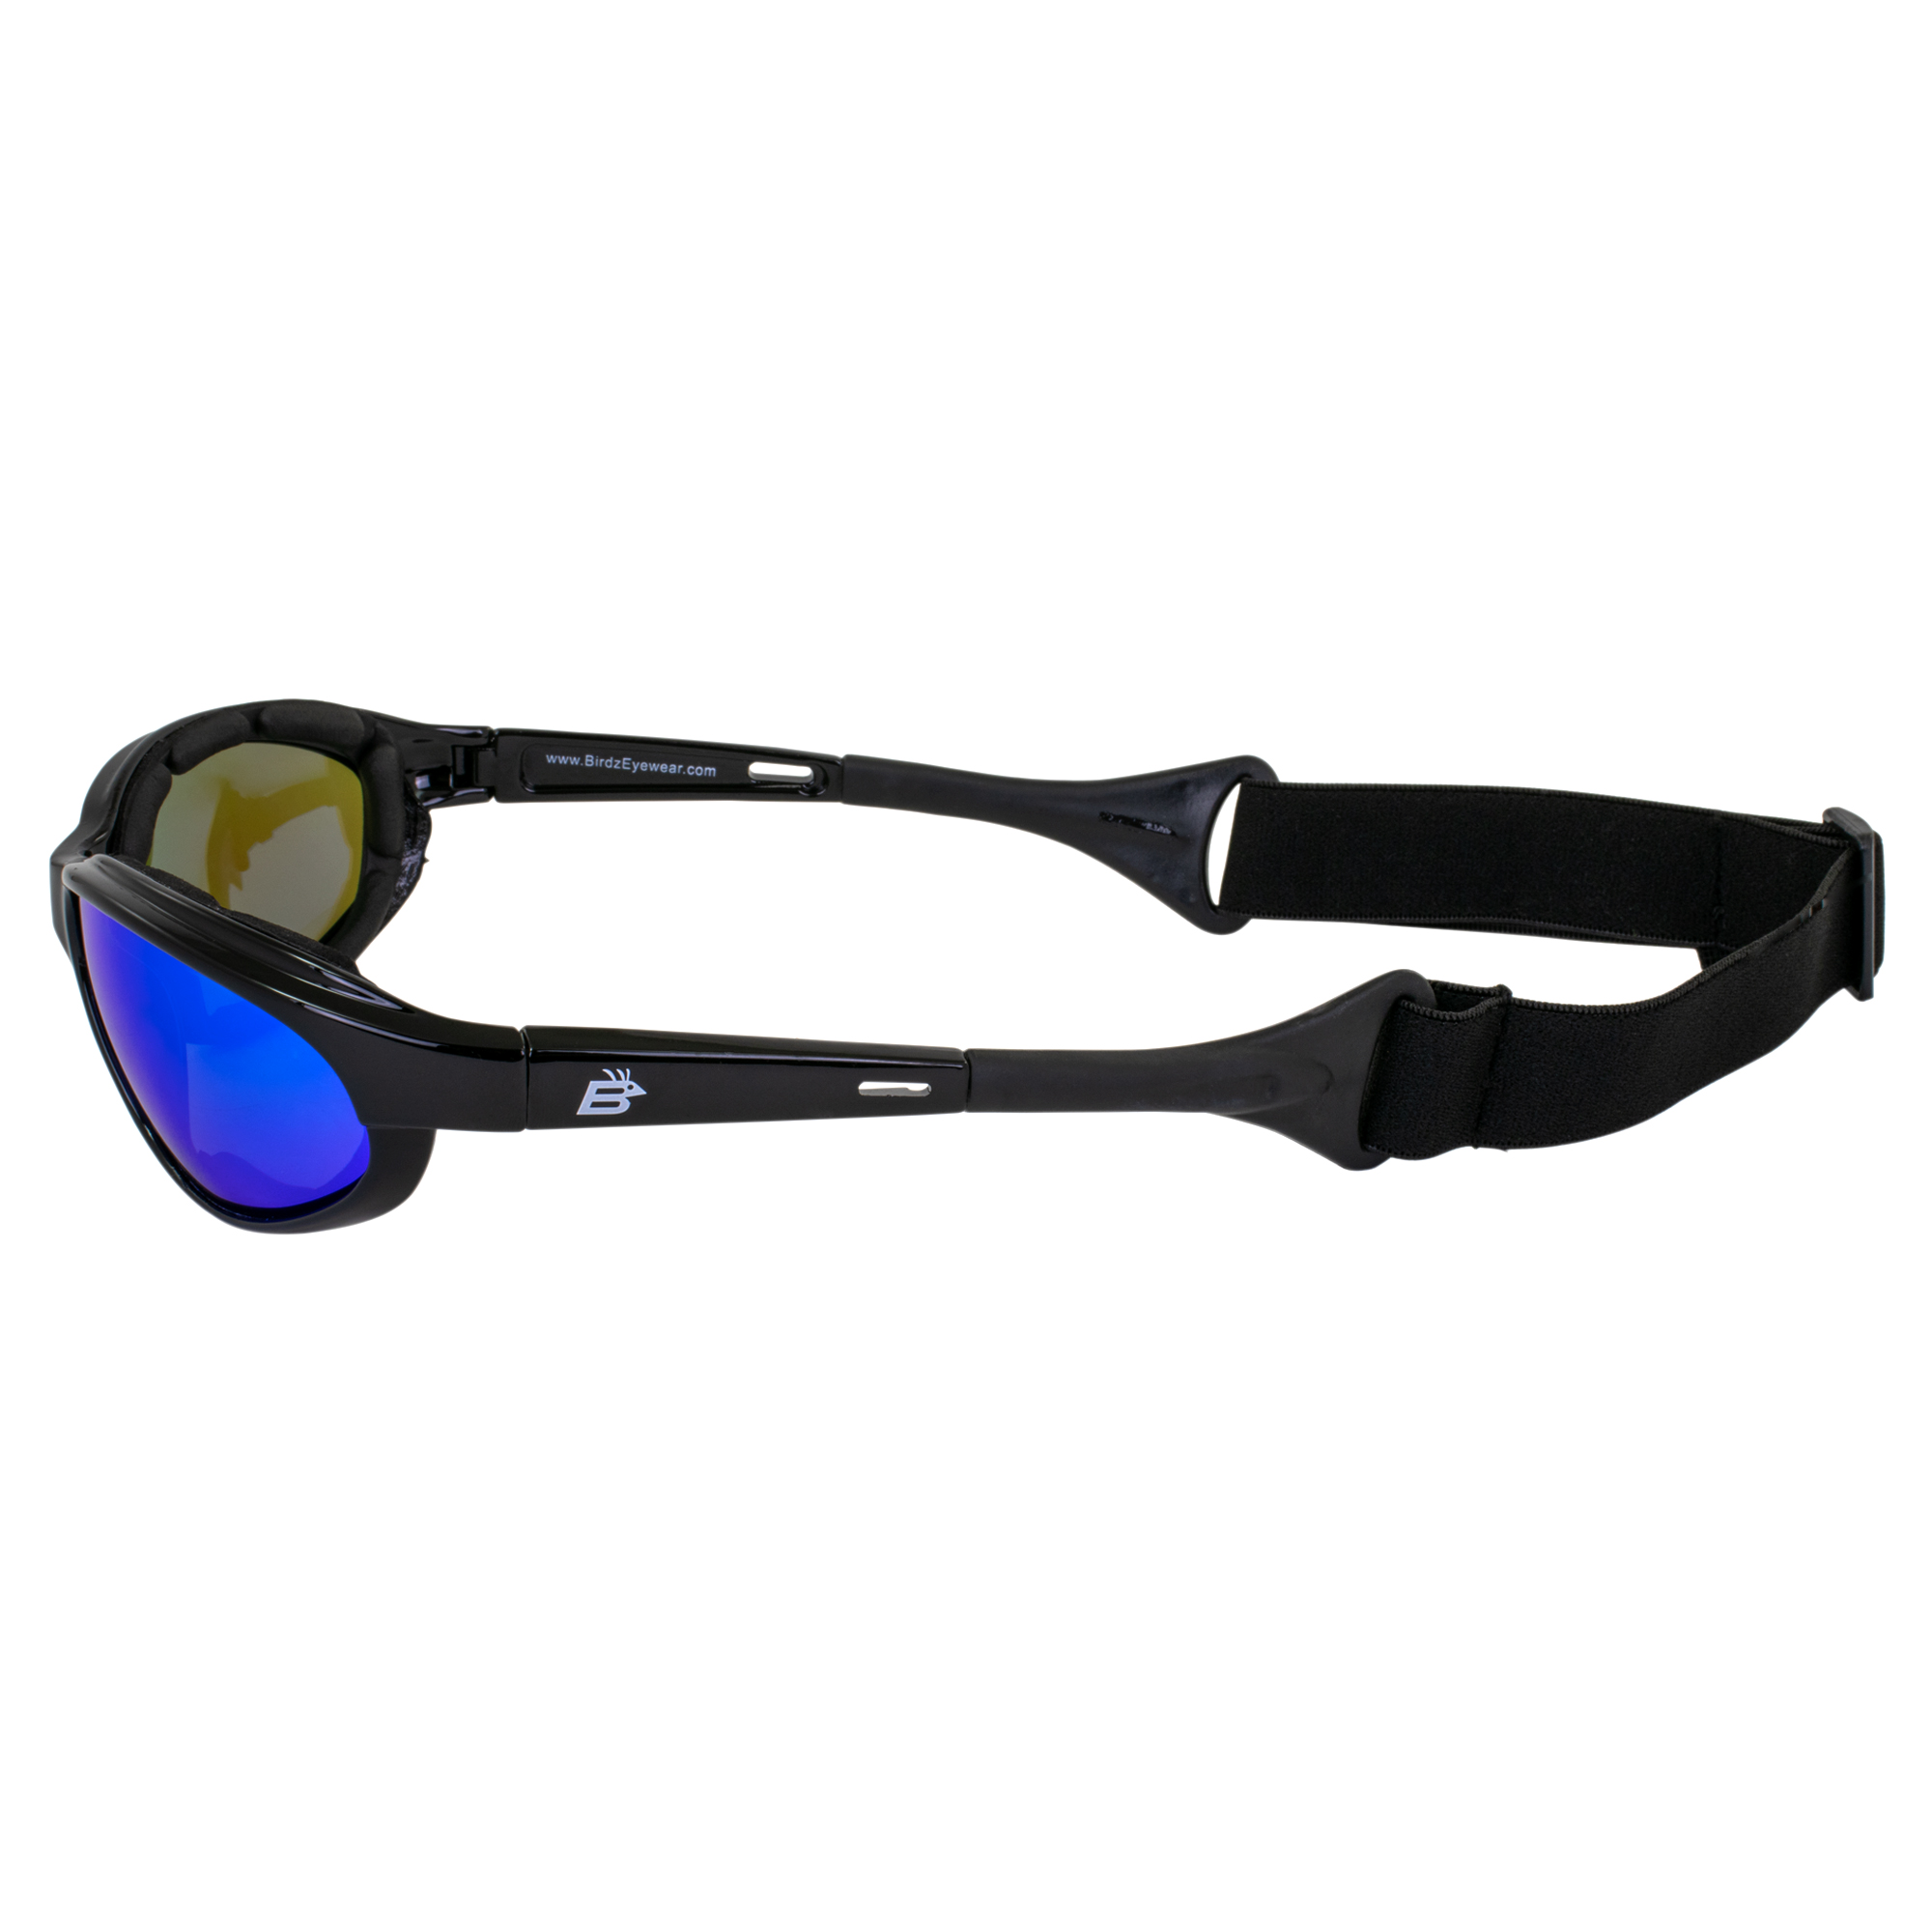 Birdz Eyewear Sail Padded Jetski Sunglasses Goggles Polarized Sports Watersports Boating Fishing for Men or Women Black Frame w/Blue Mirror Lens - image 3 of 6